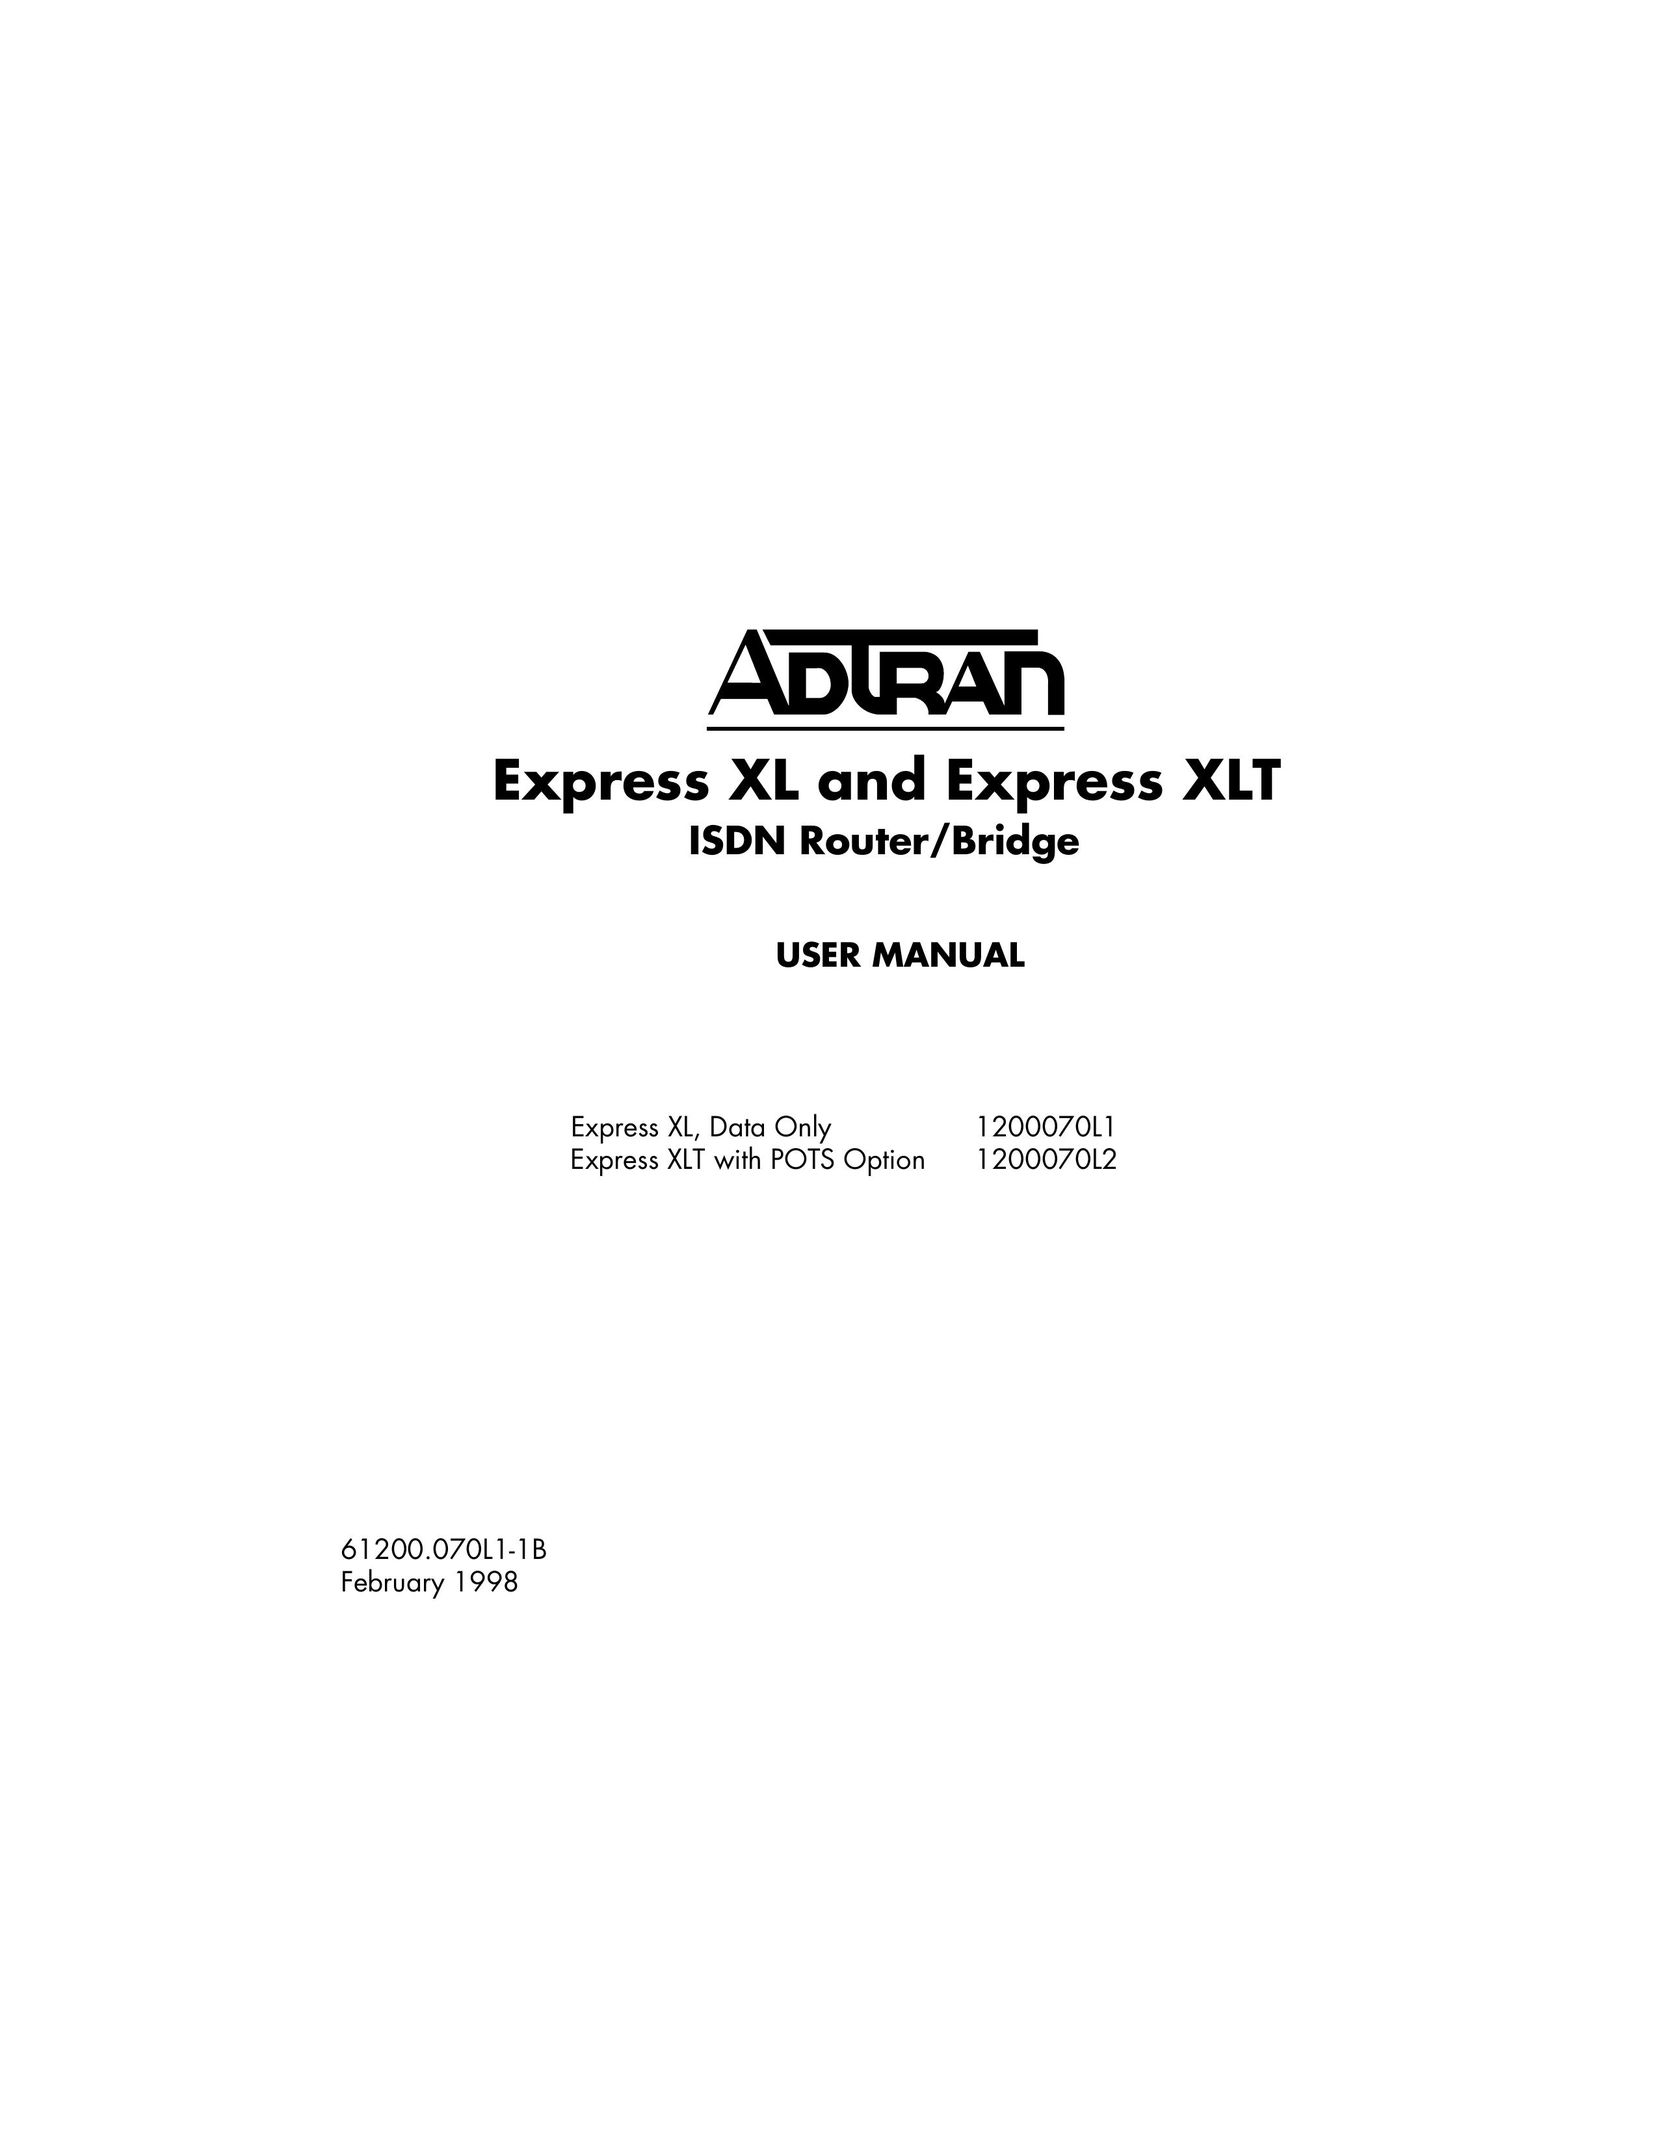 ADTRAN 1200070L2 Network Router User Manual